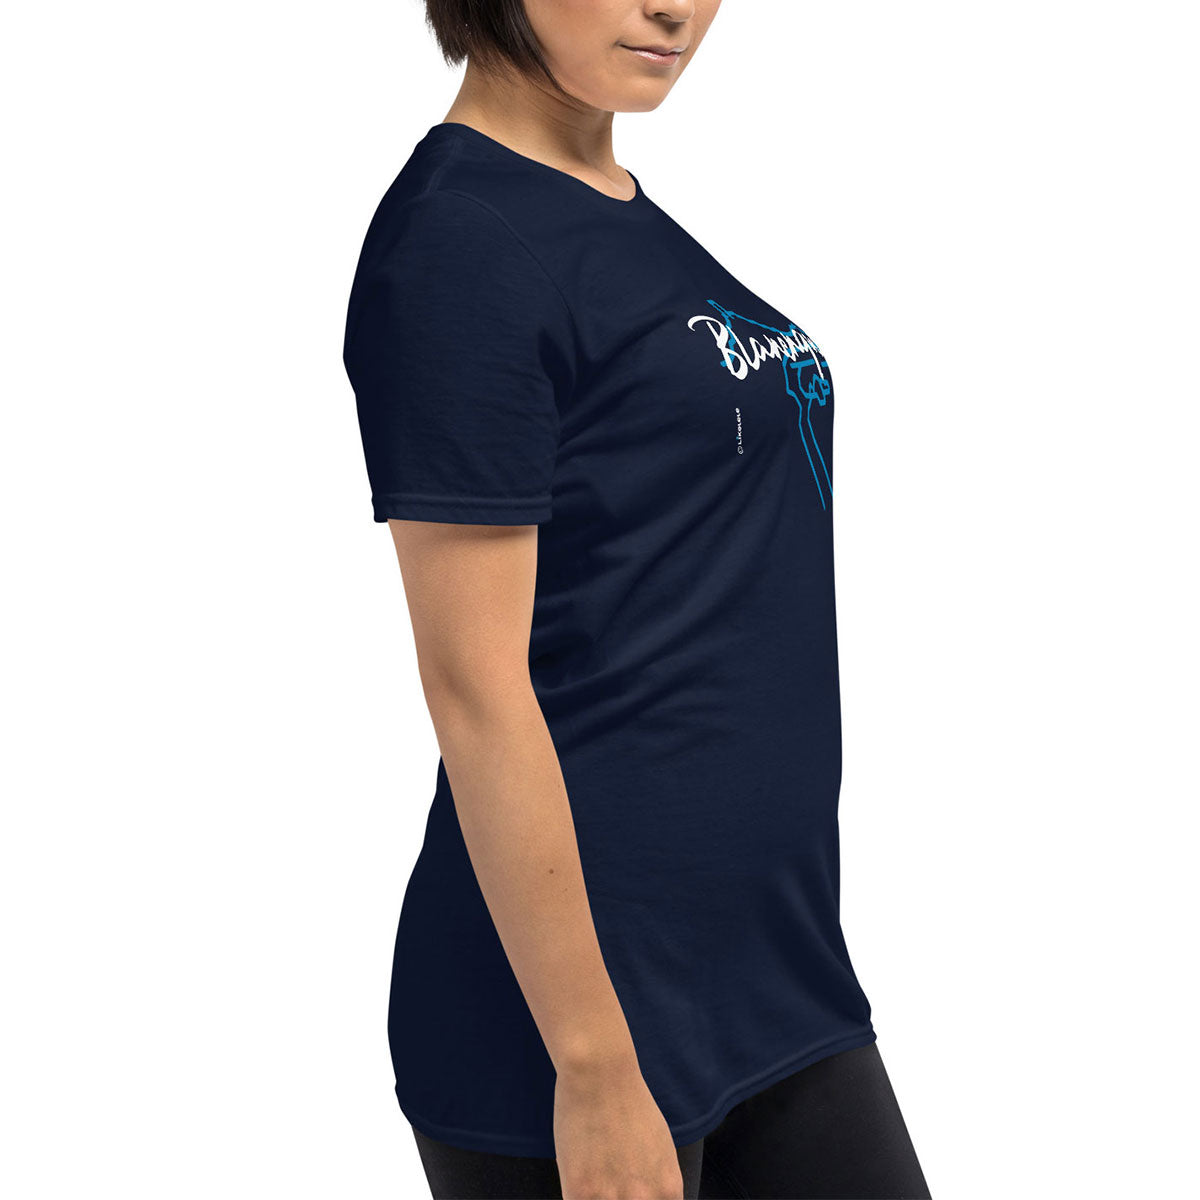 BLANENQUES · Camiseta m/corta·Mujer/Unisex · Basic·Navy-101c2